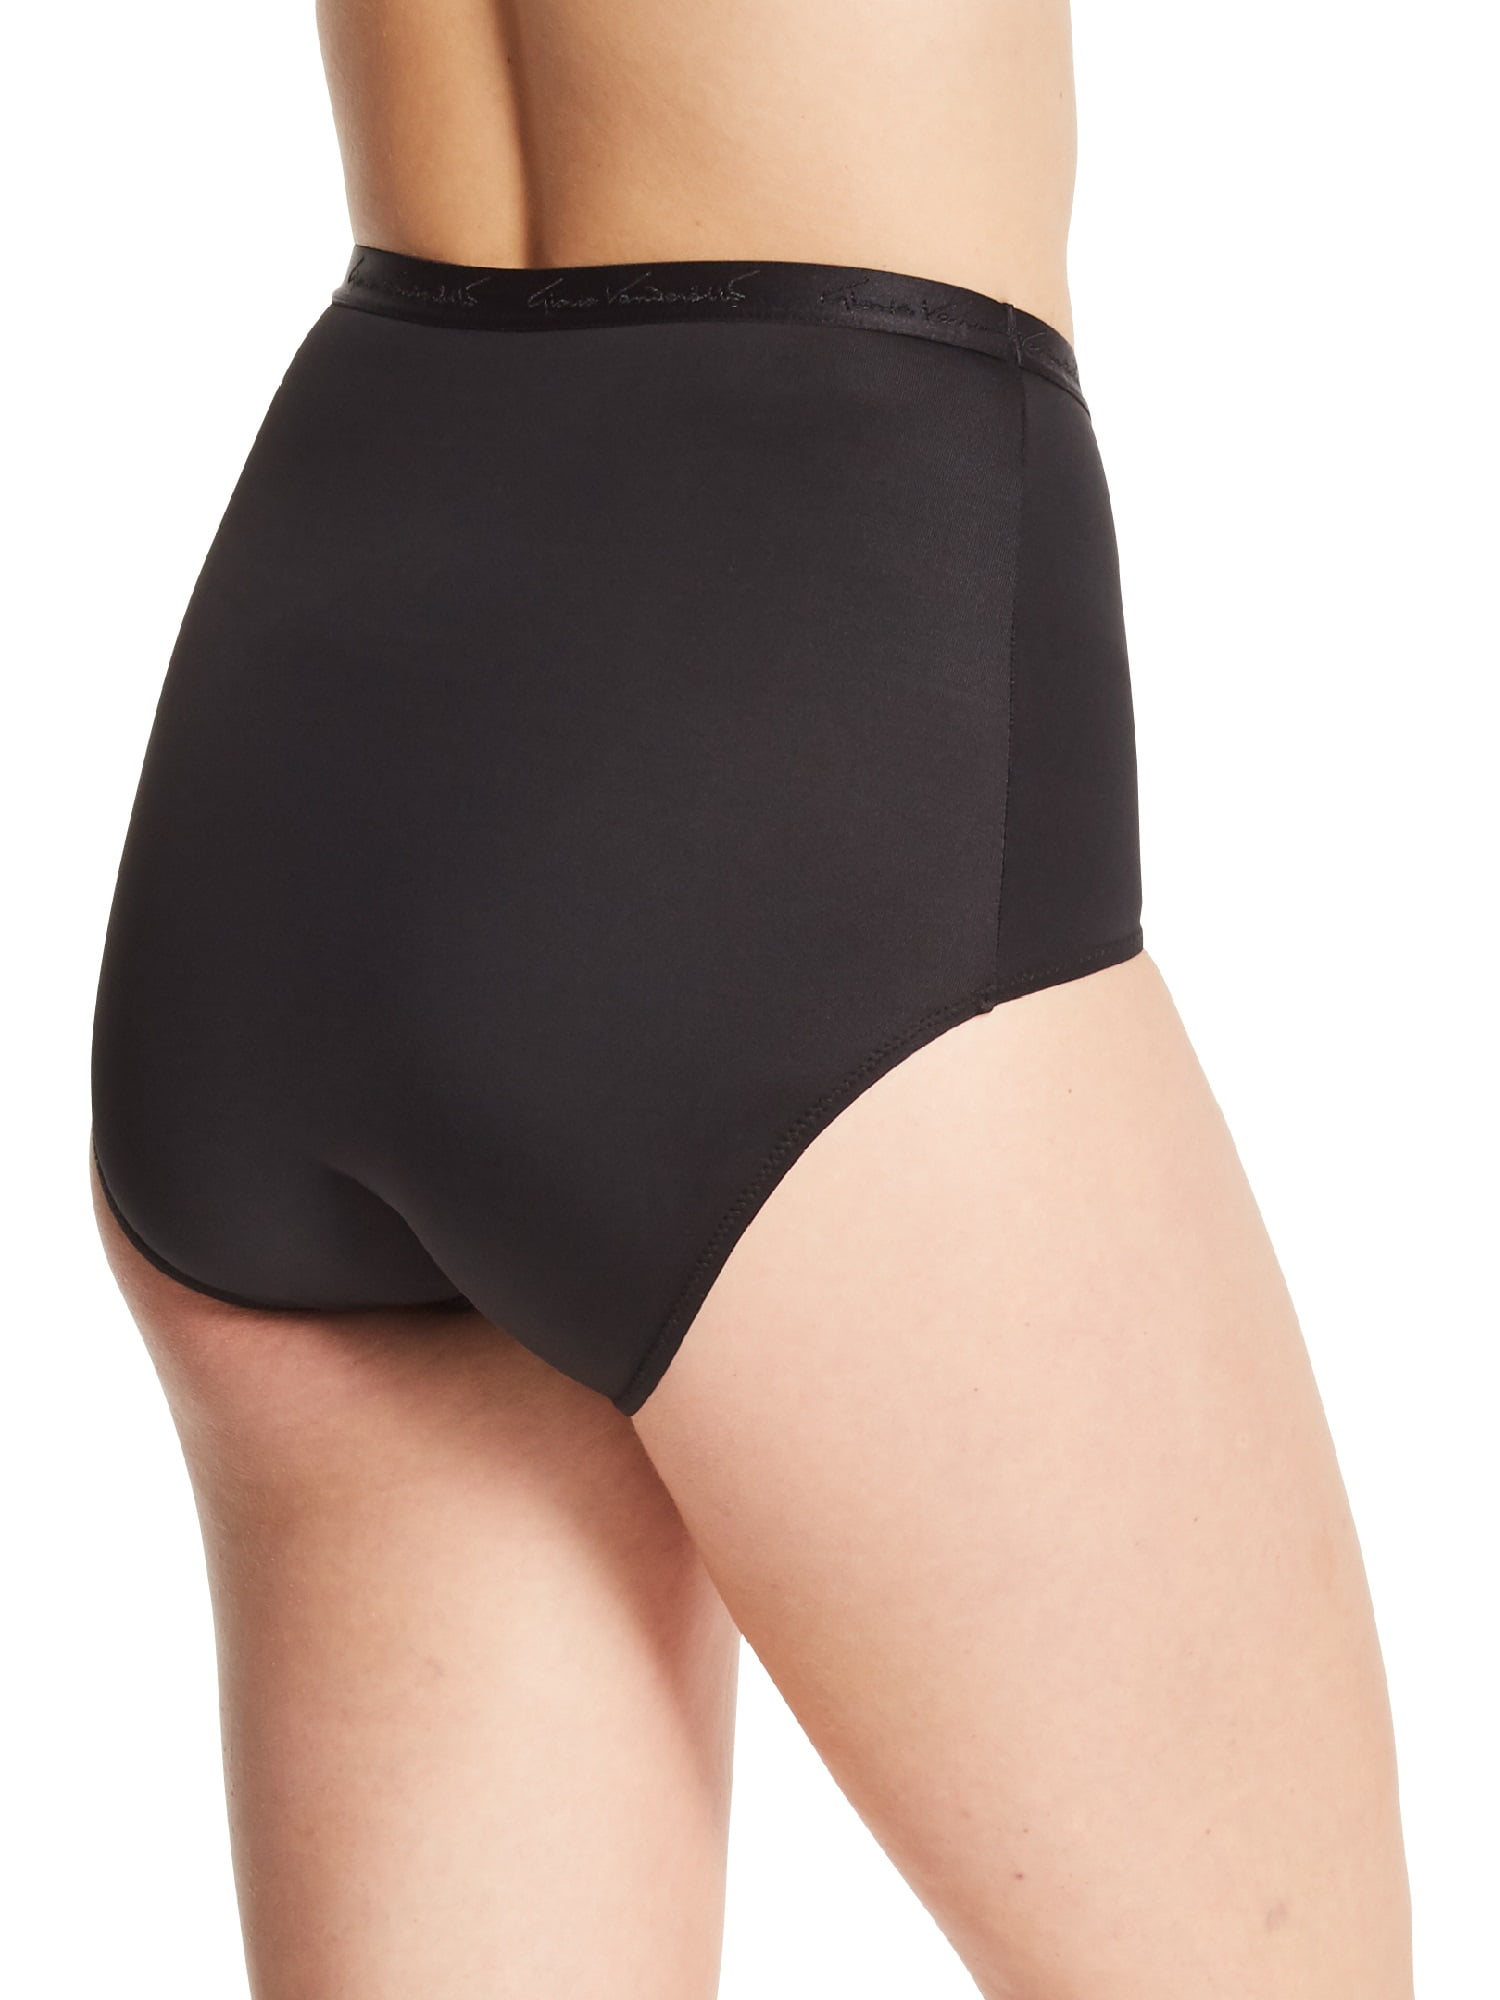 Gloria Vanderbilt Women's 3 Pack Control Shaping Panty 